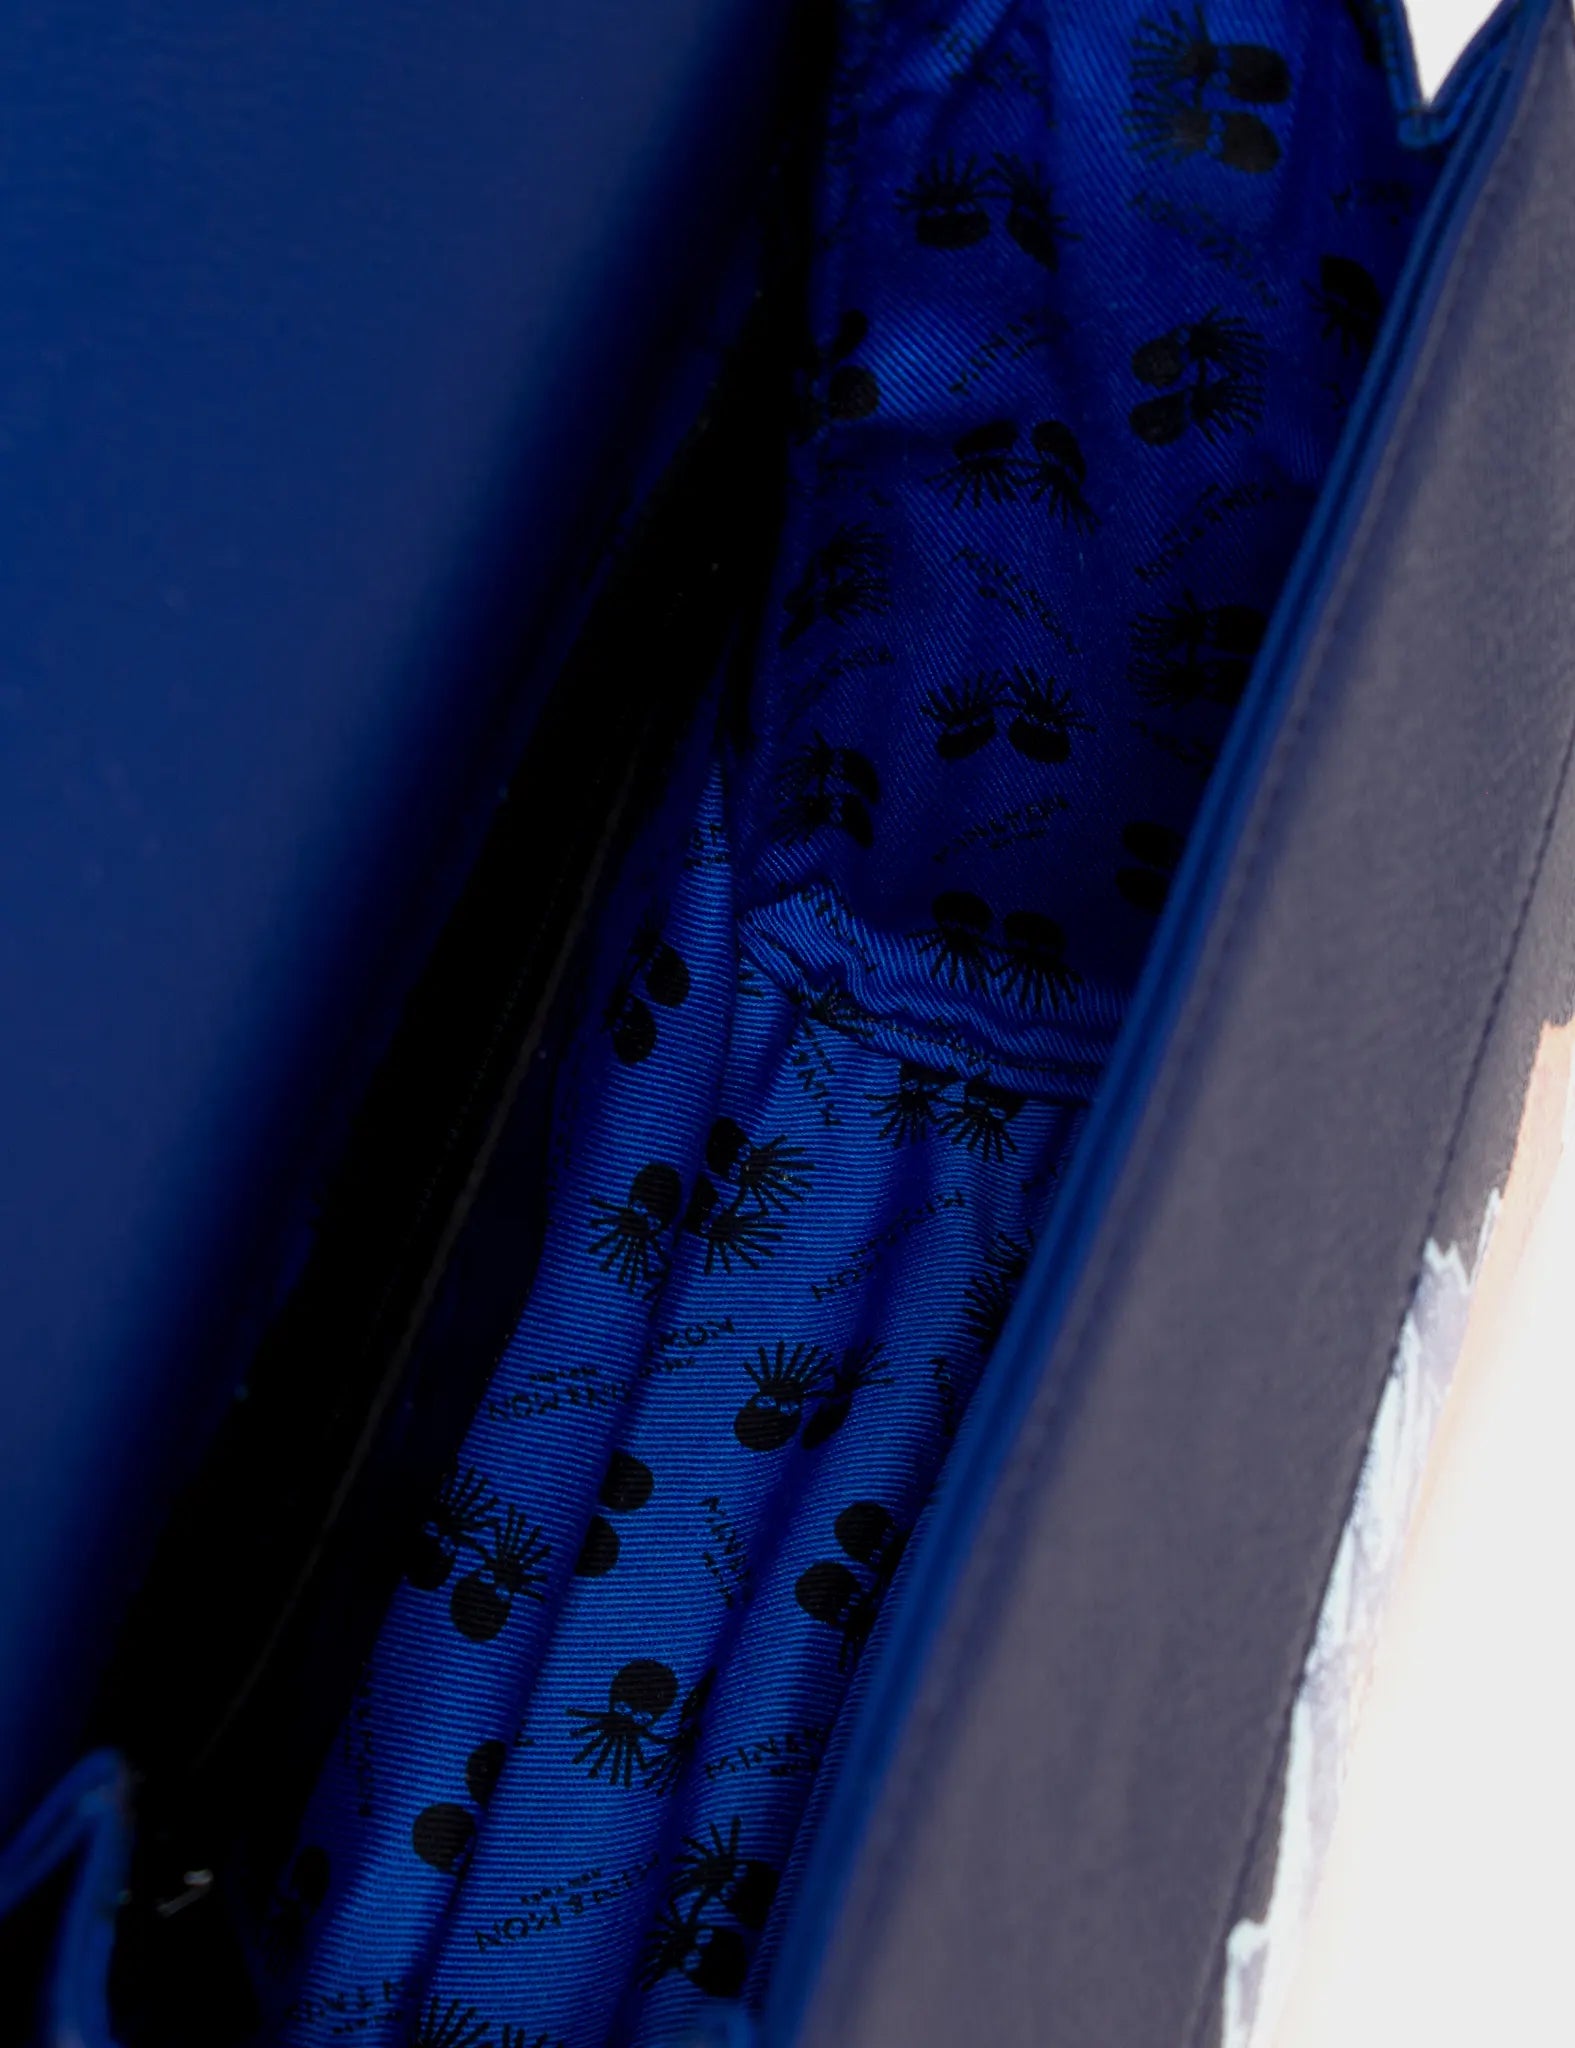 Mini Crossbody Handbag Royal Blue Leather - Clouds Embroidery - Inside